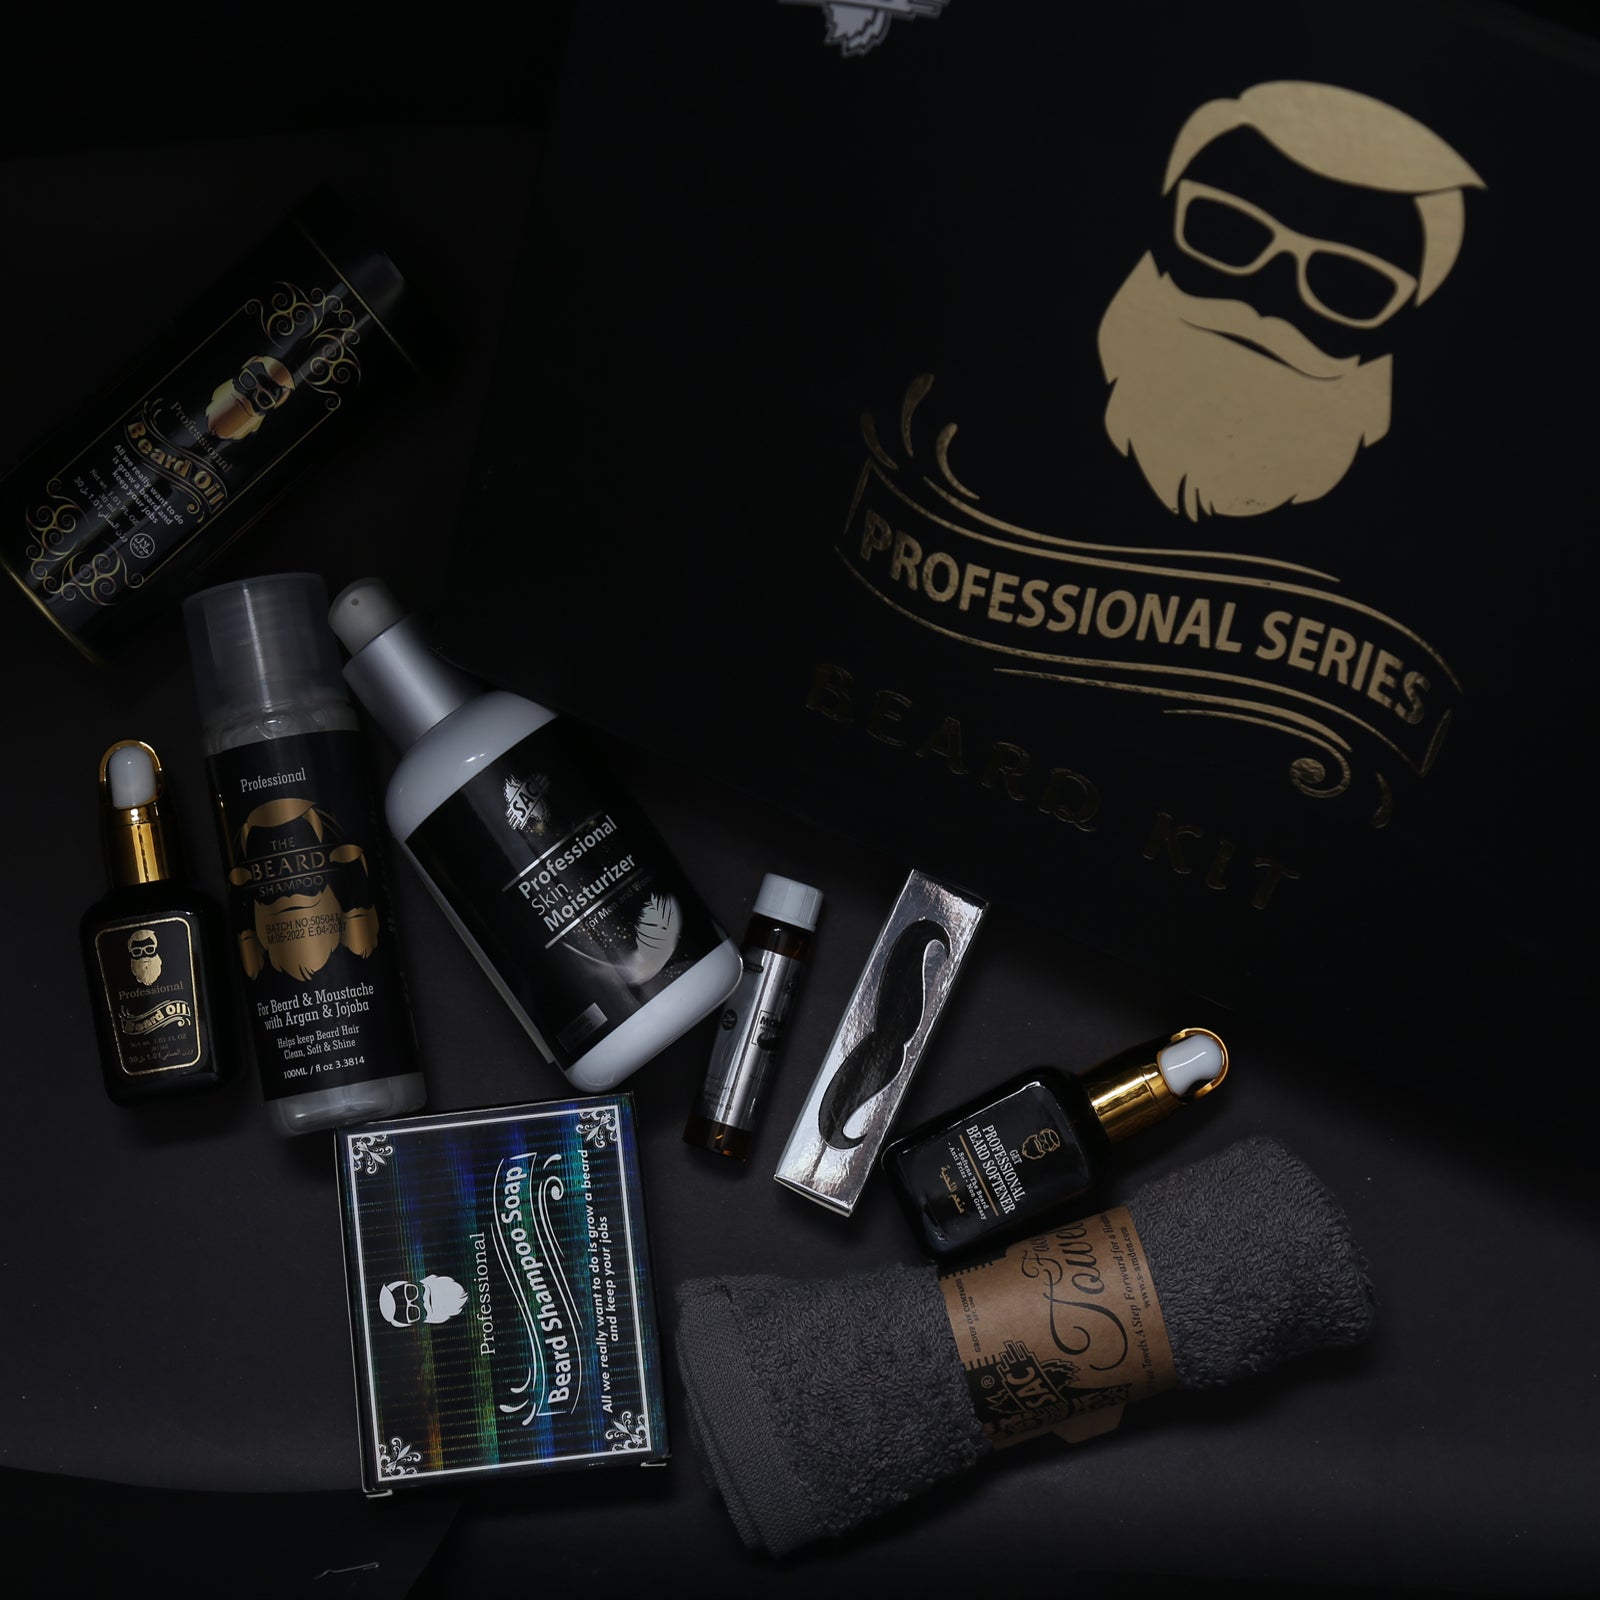 Professional Beard Kit for Grooming, Growth & Maintenance Kit - Professional Beard Oil+Moustache Oil+Beard Serum+Beard Bar+Body Lotion+Face Towel